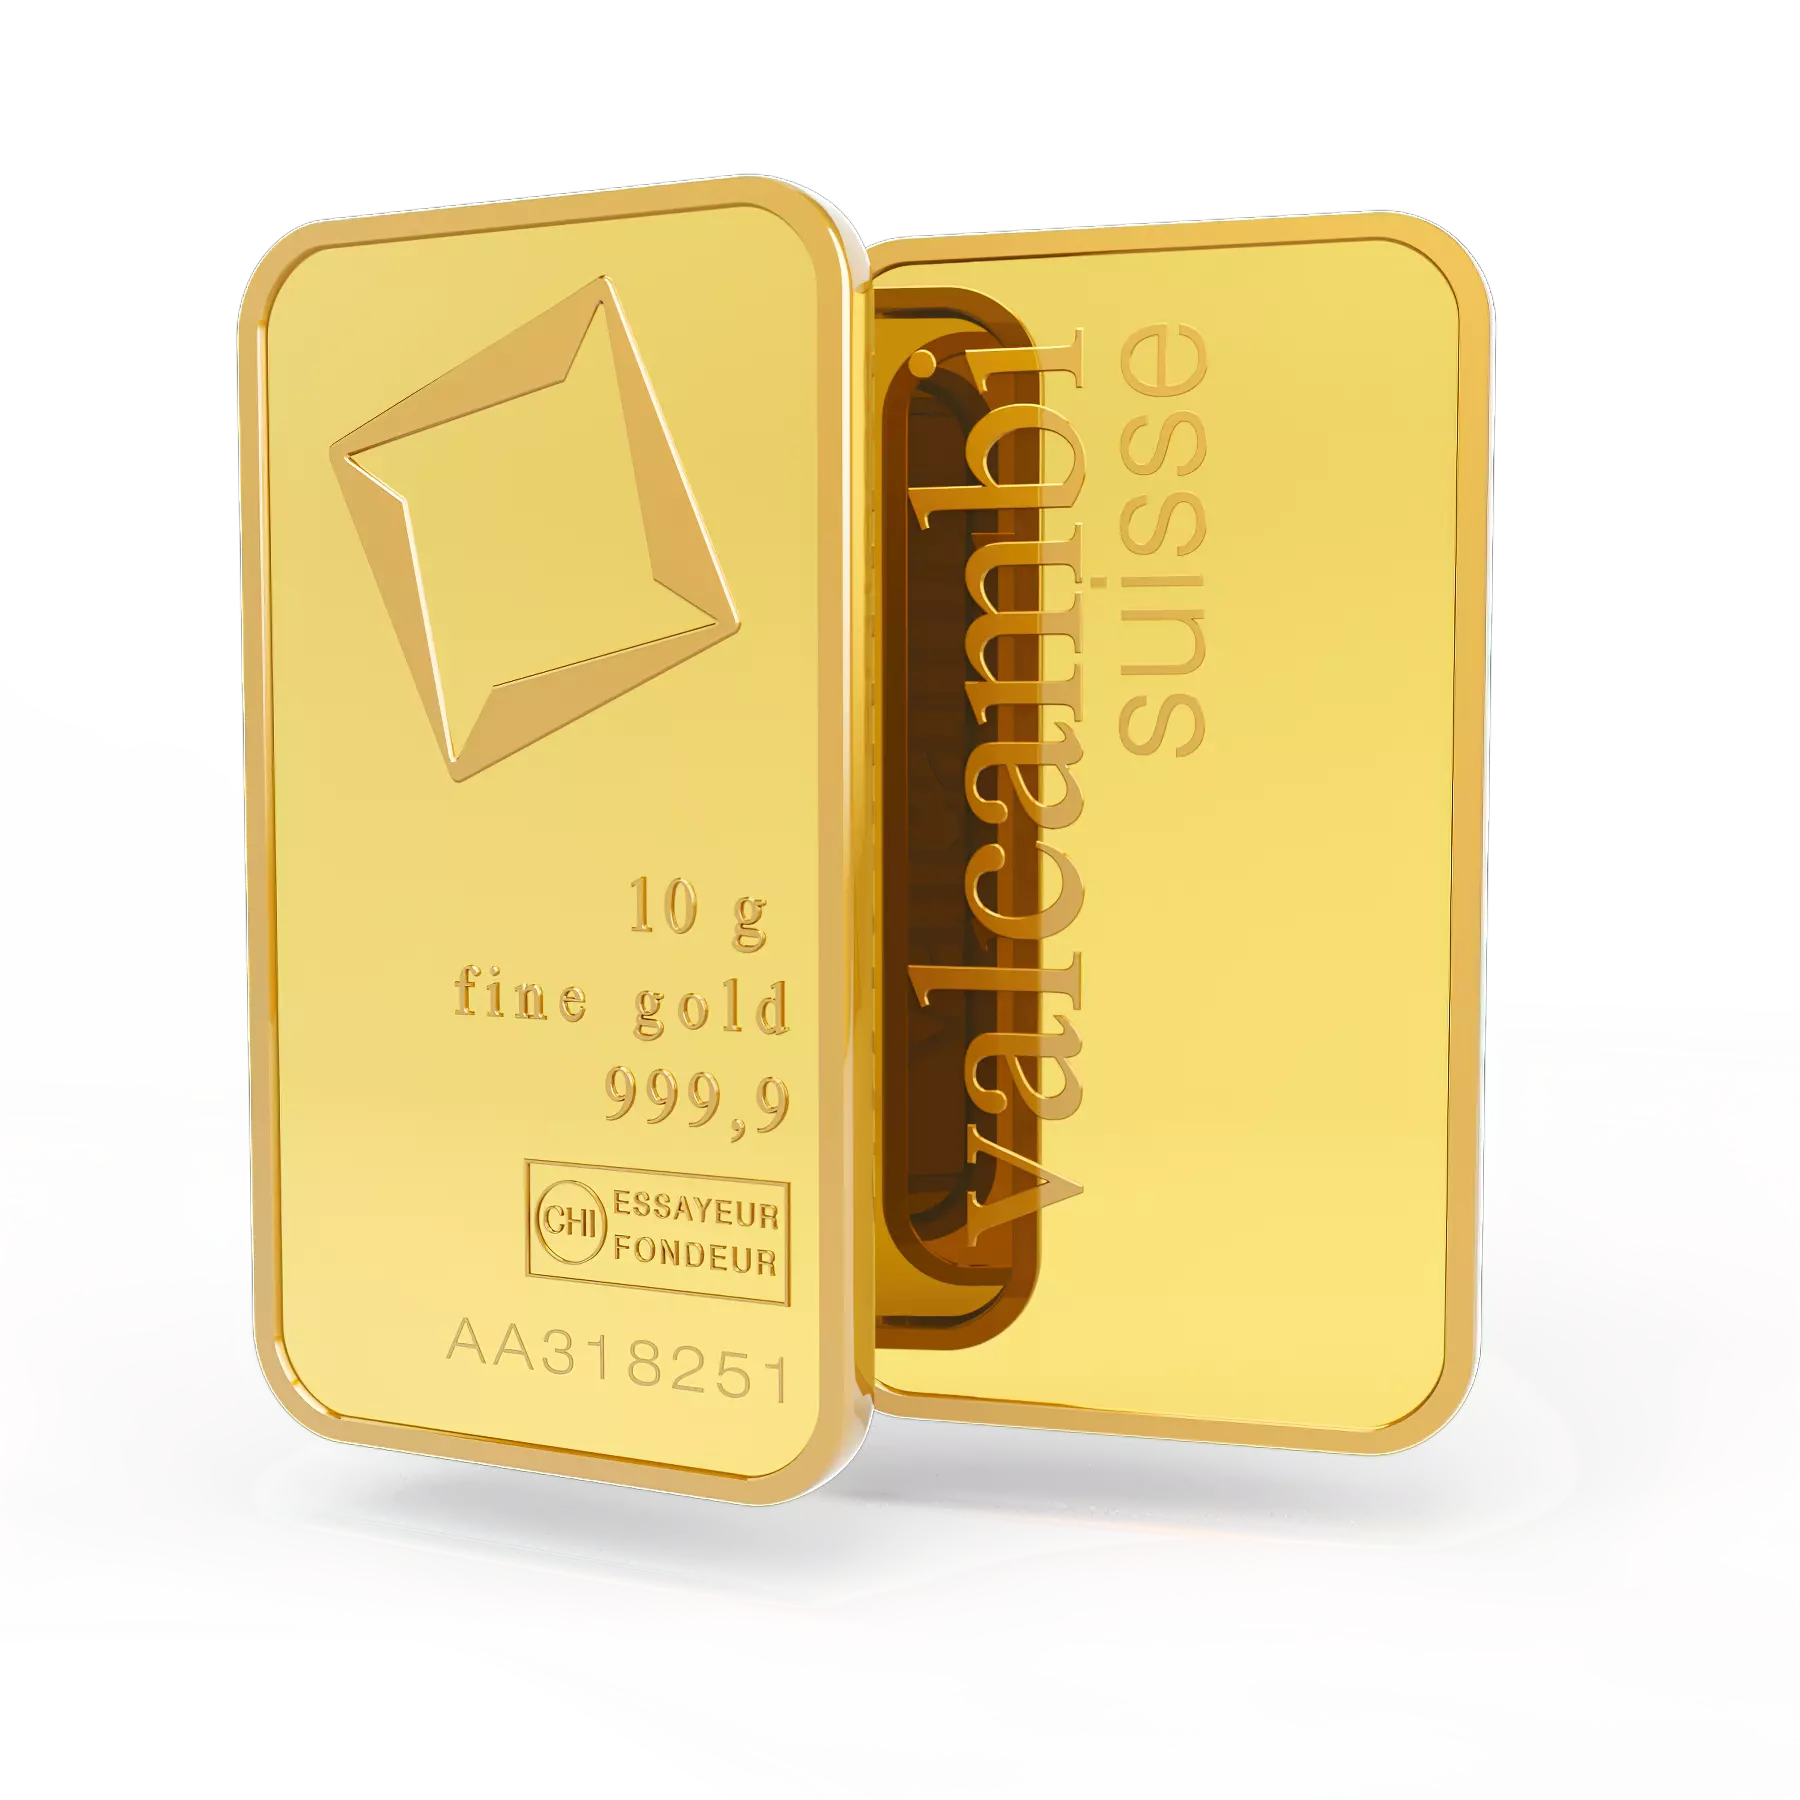 Lingou aur 10g, Elvetia, Fine Gold, 999,9